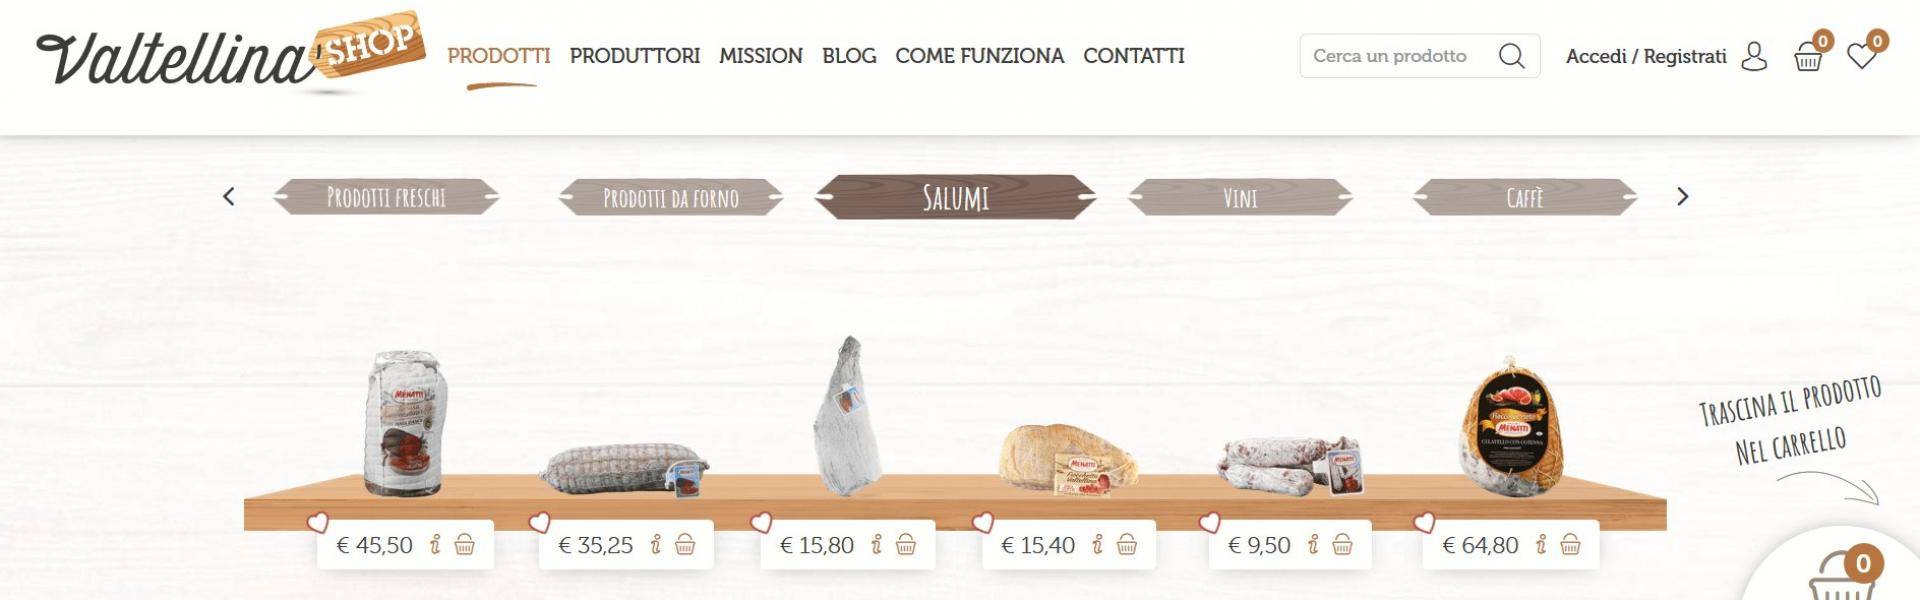 I Salumi Menatti su Valtellina Shop: vendita online eccellenze valtellinesi